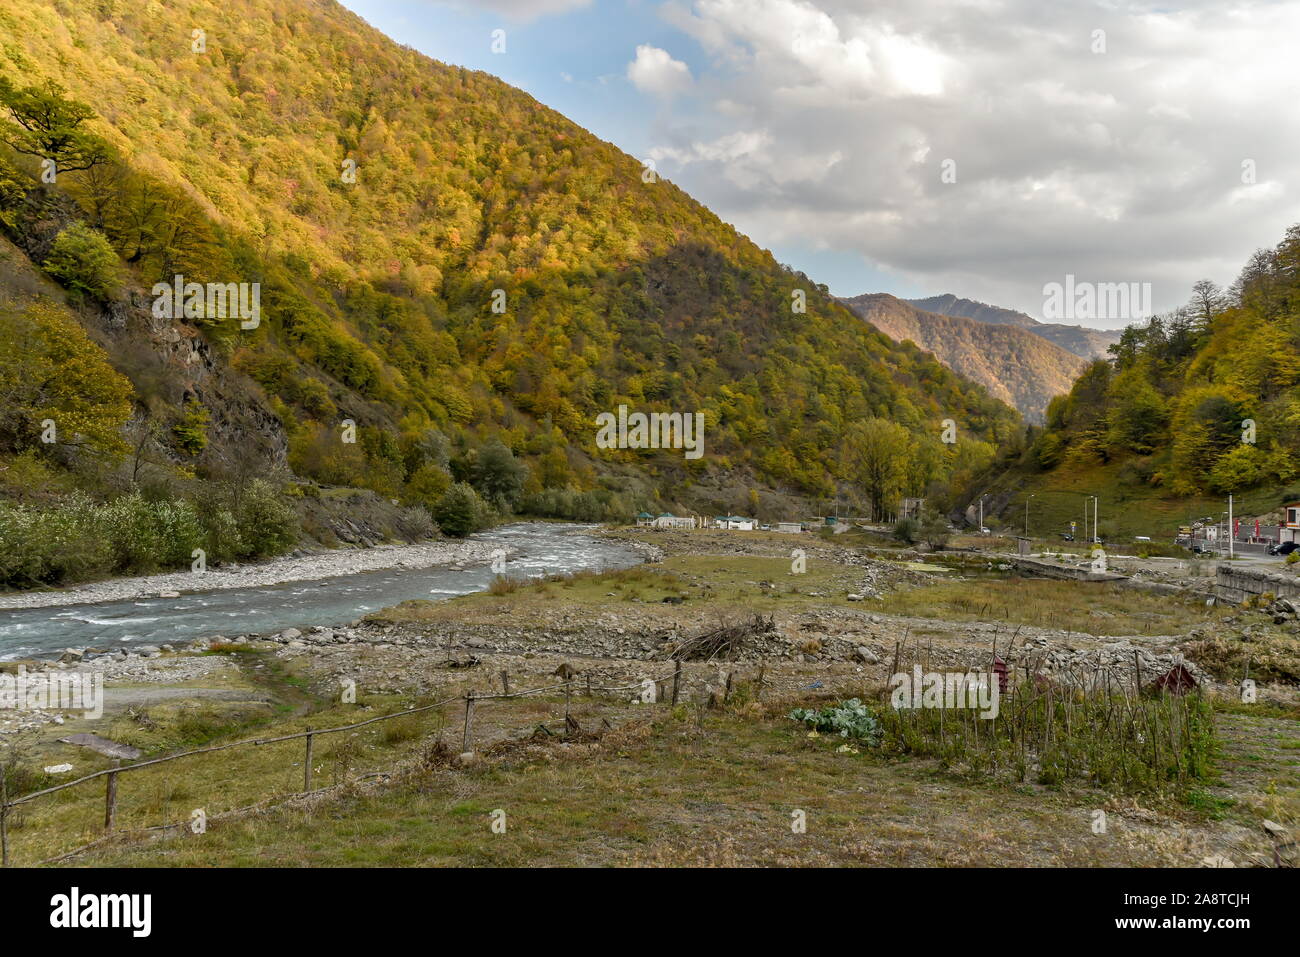 Road and nature view Tbilisi to Kazbegi by private car , October 19, 2019, Kazbegi, Republic of Gerogia Stock Photo - Alamy